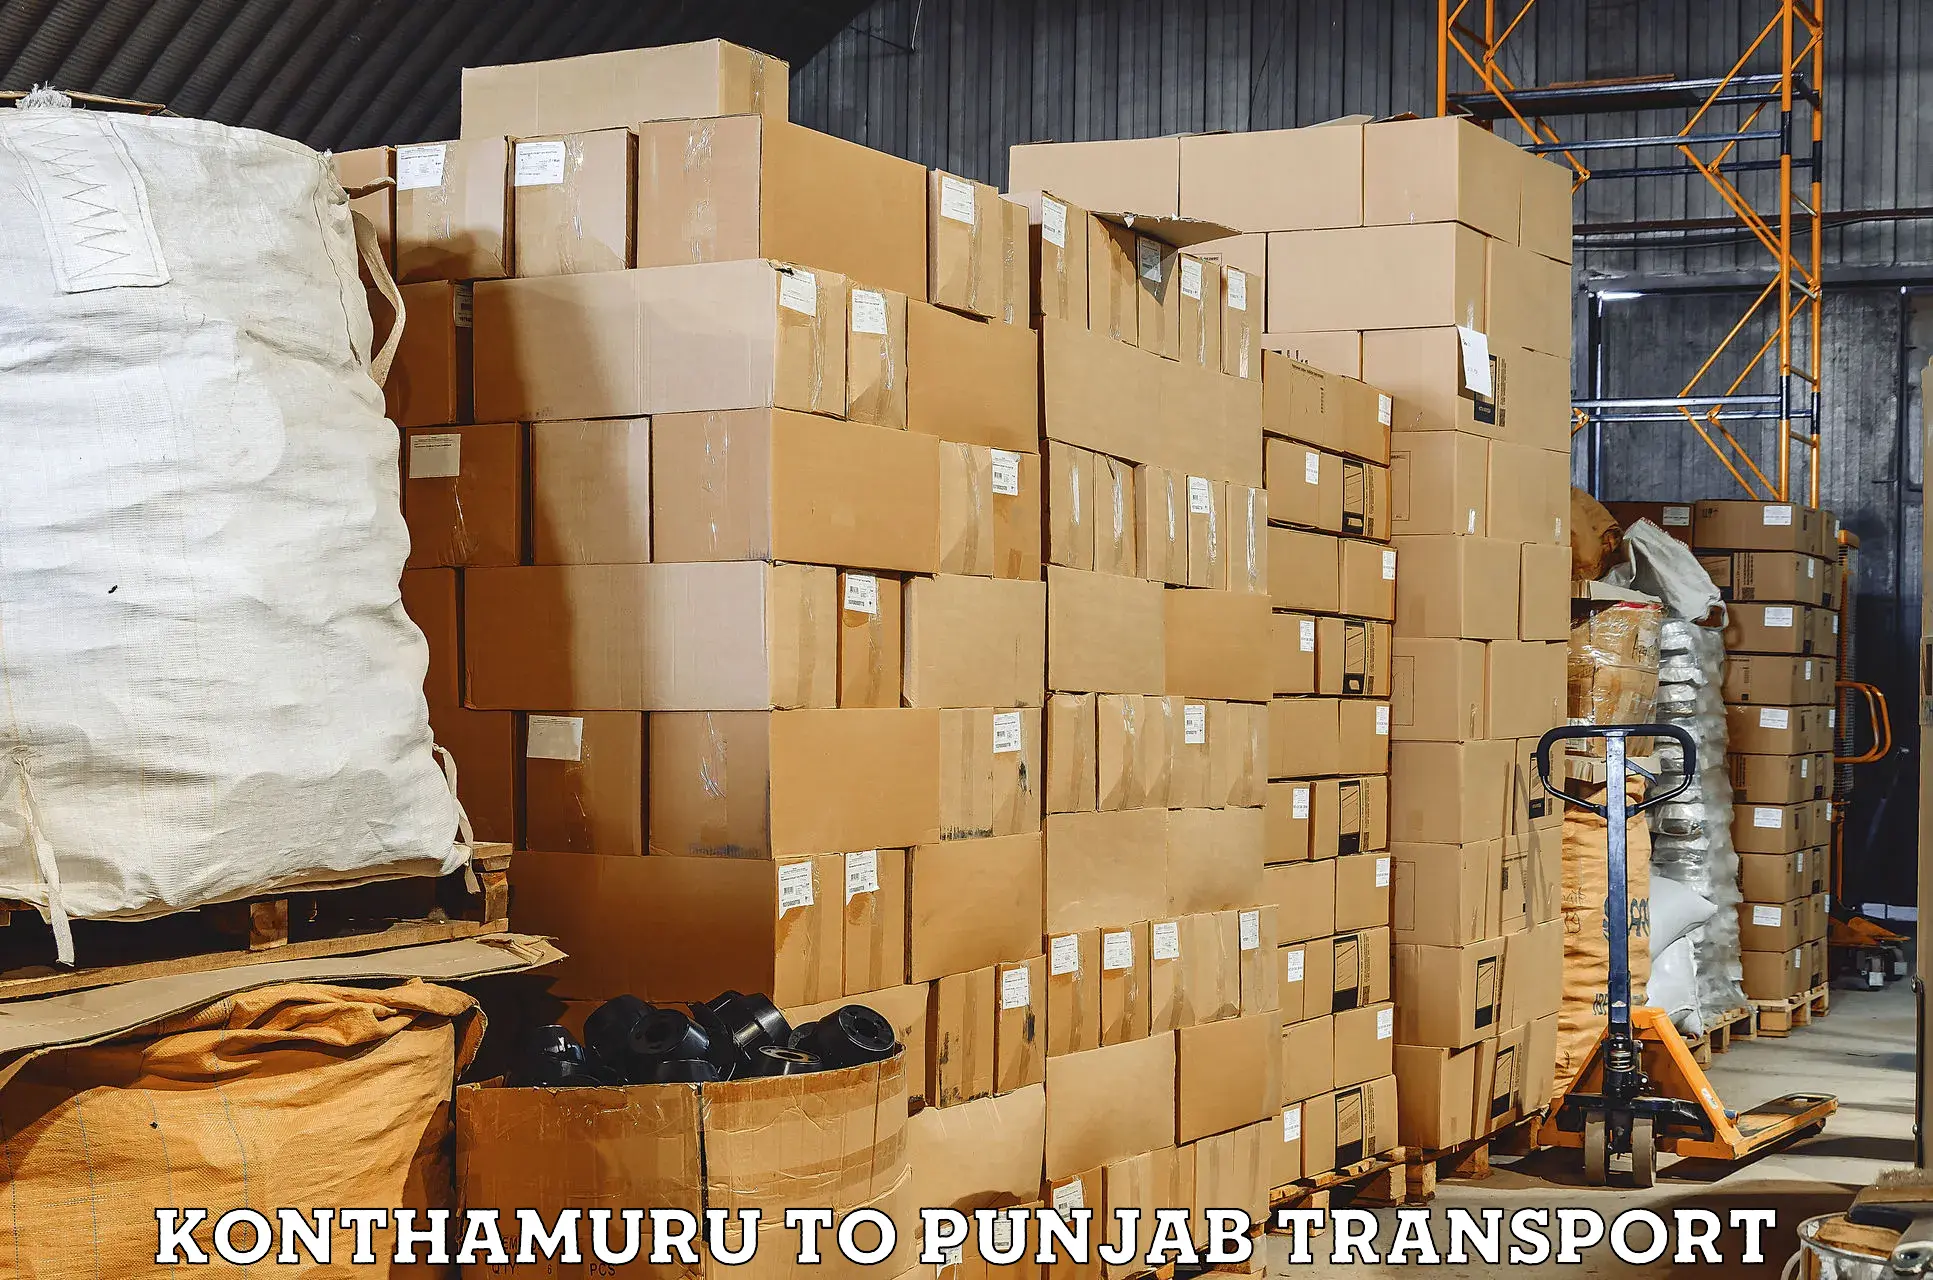 Furniture transport service Konthamuru to Malerkotla